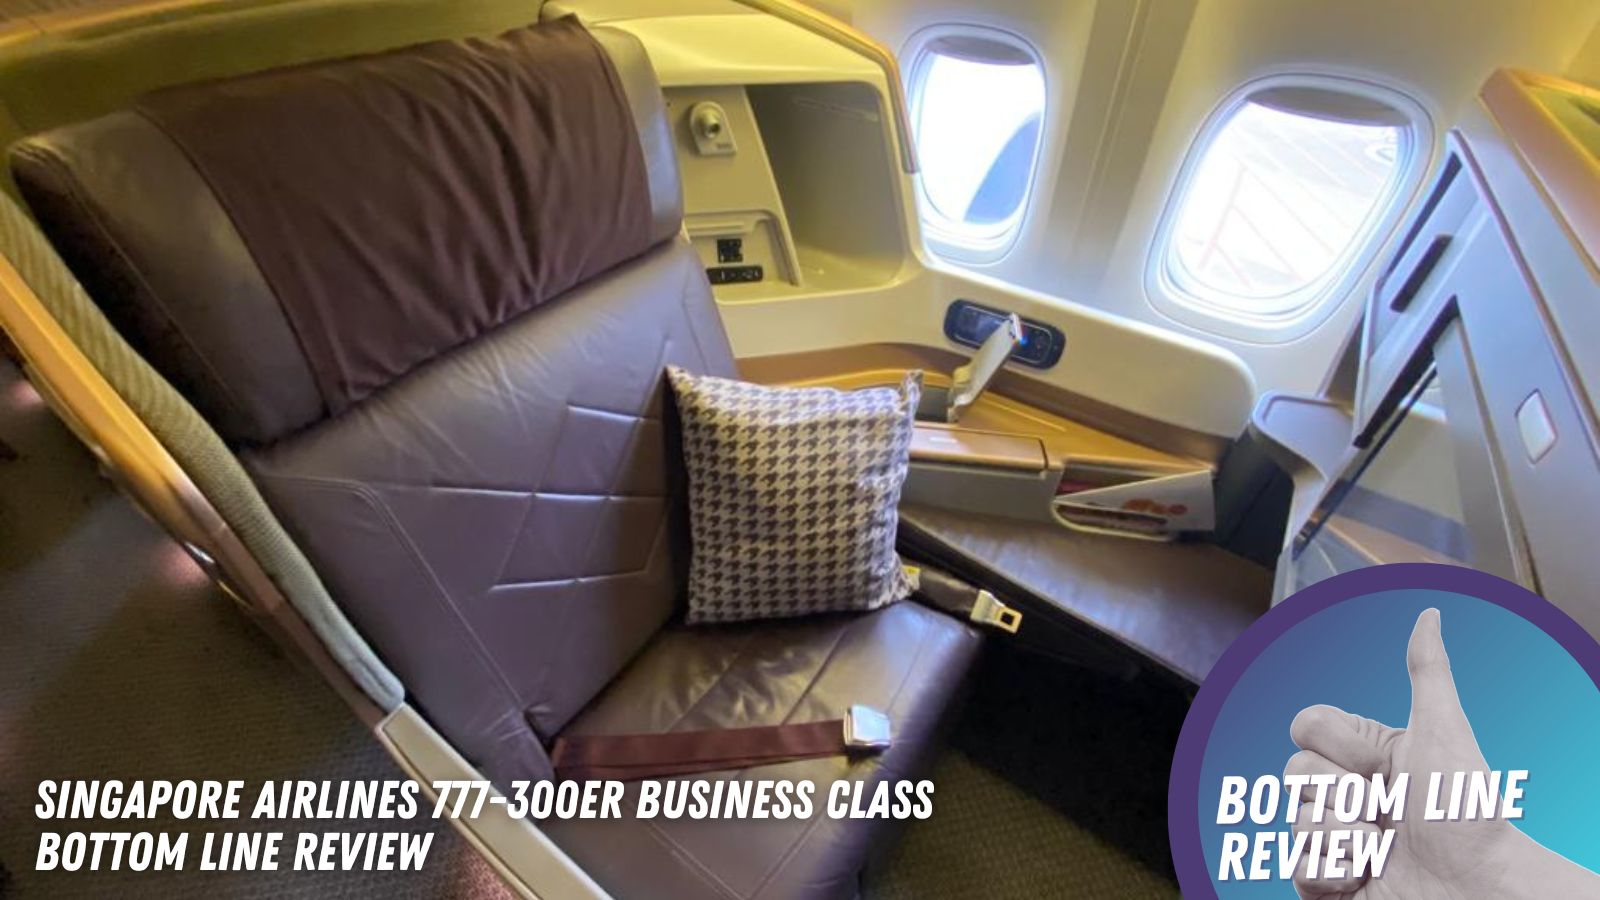 Singapore Airlines 777-300ER Business Class: Bottom Line Review